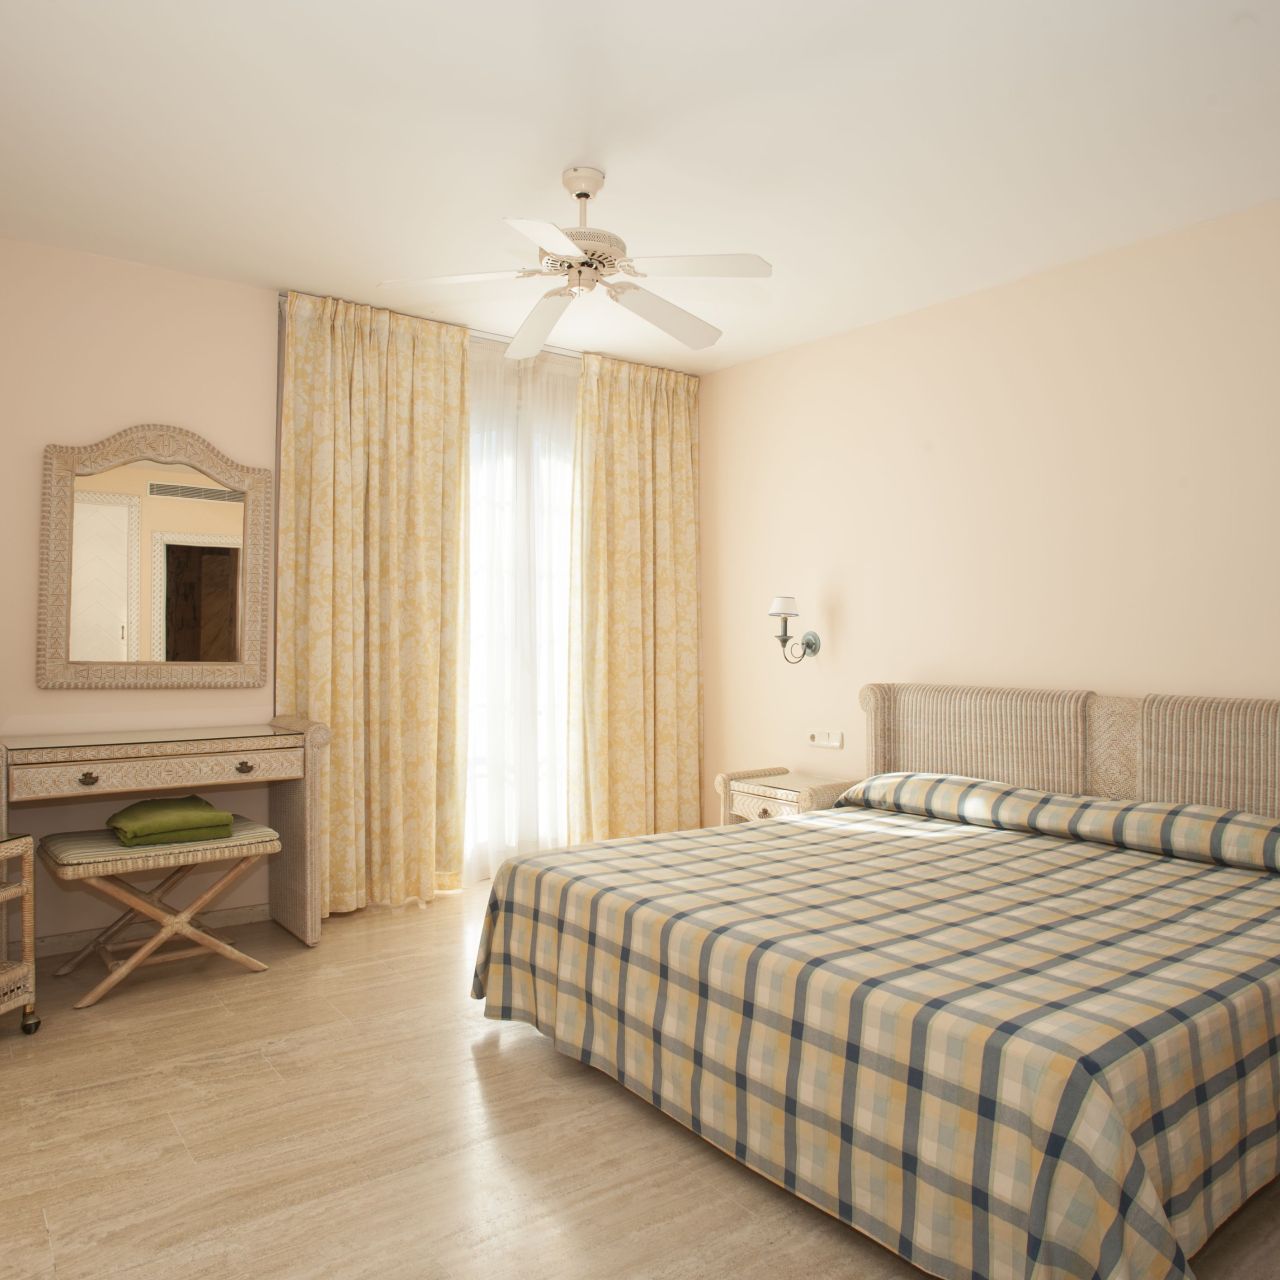 Hotel Palm Oasis Maspalomas - San Bartolomé de Tirajana - Great prices at  HOTEL INFO